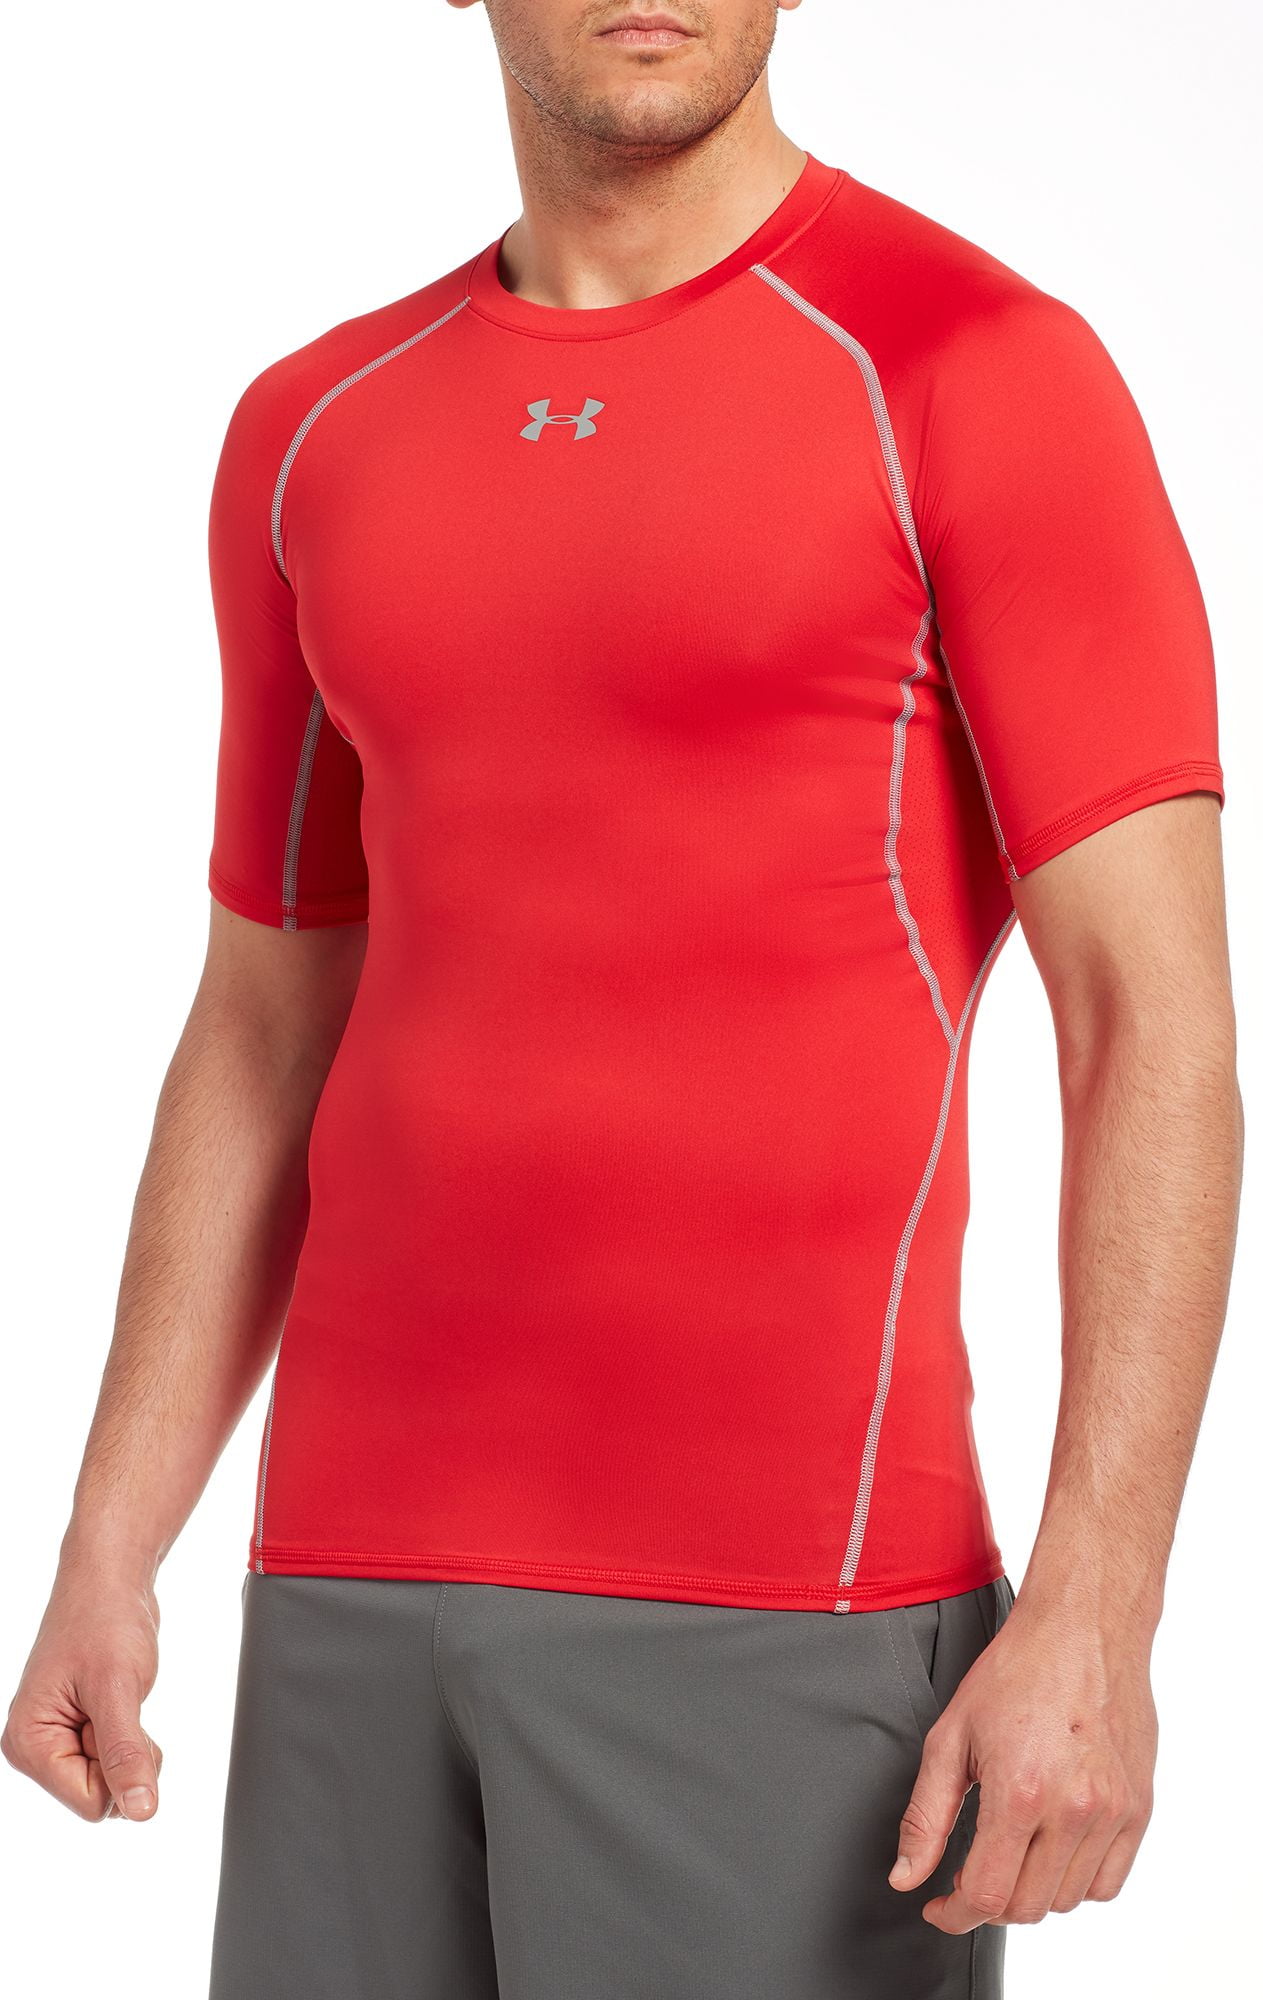 marketing Prediken Koken under armour 1257468 men's red heatgear s/s compression shirt - size  x-large - Walmart.com